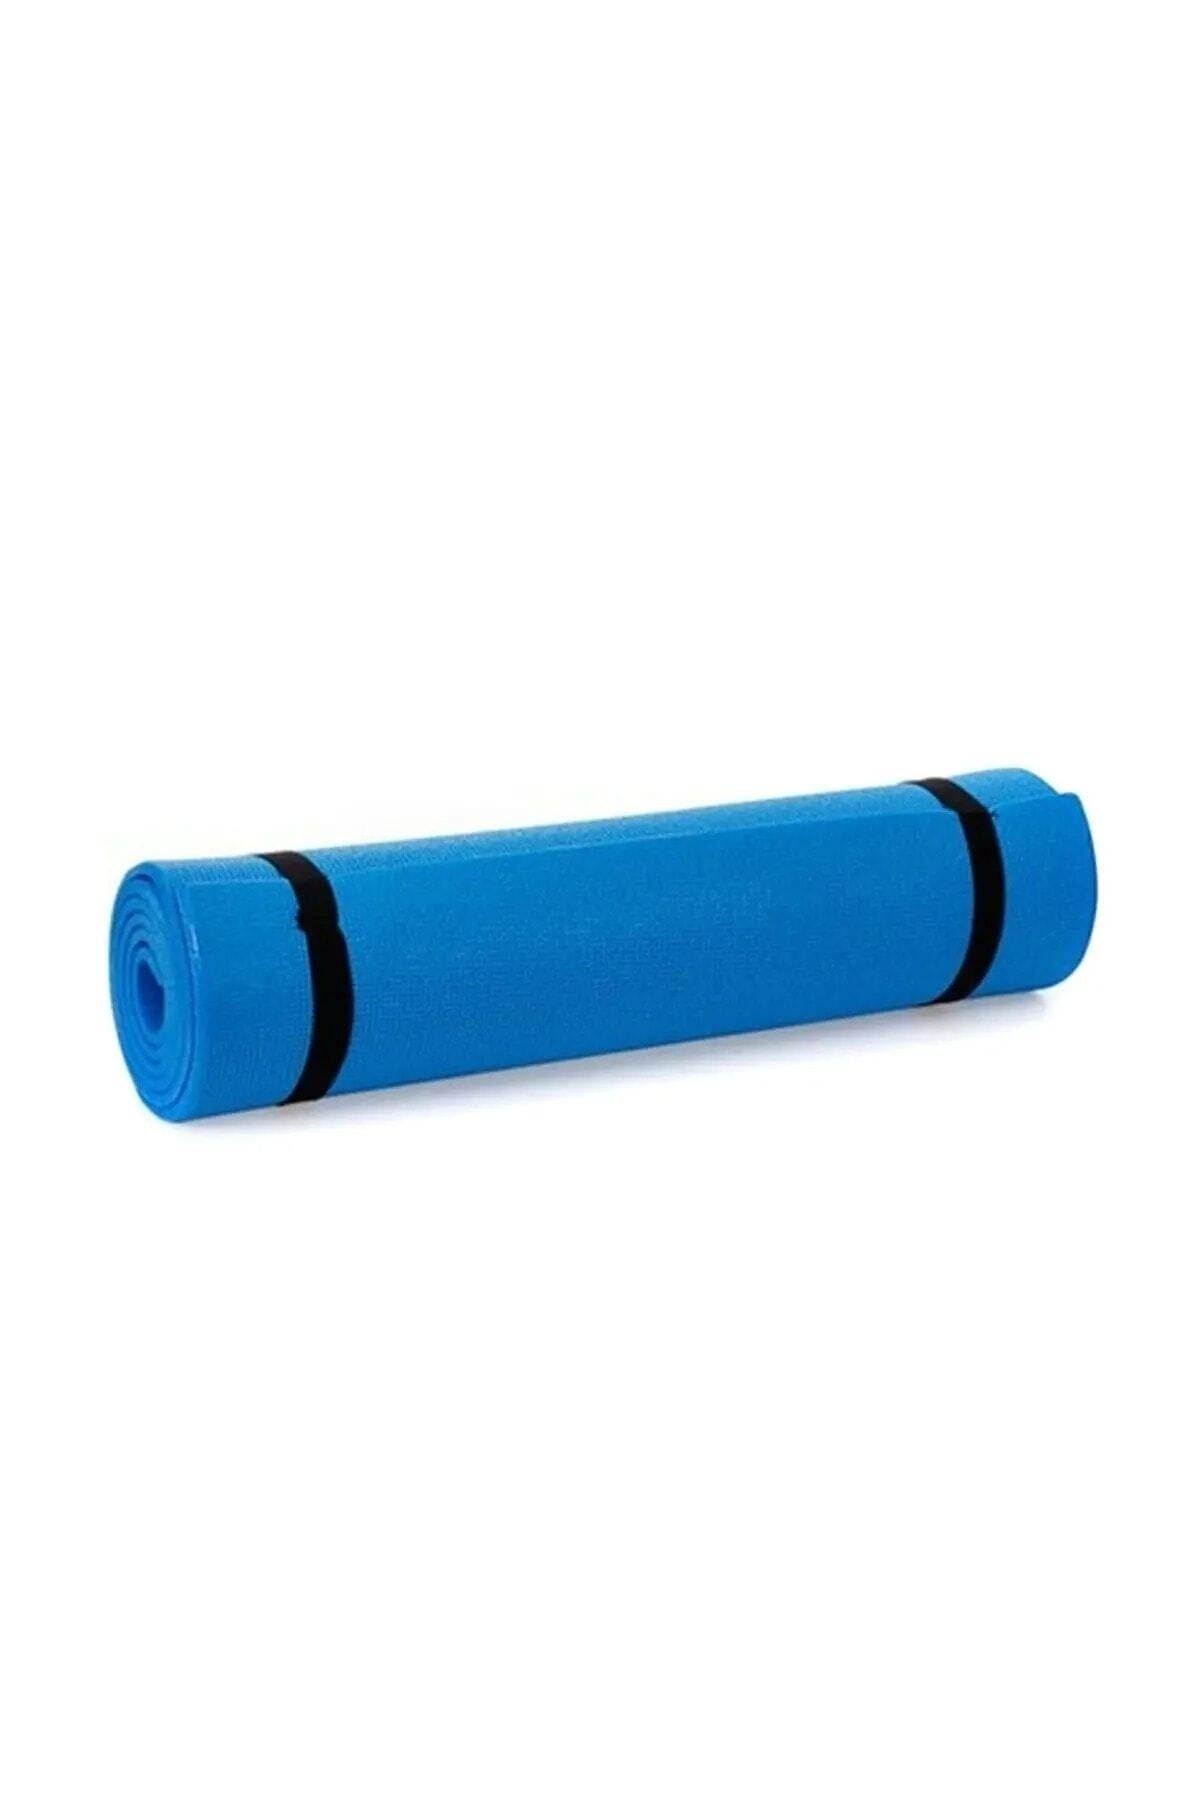 Yukon Pilates And Yoga Mat  Size: blue